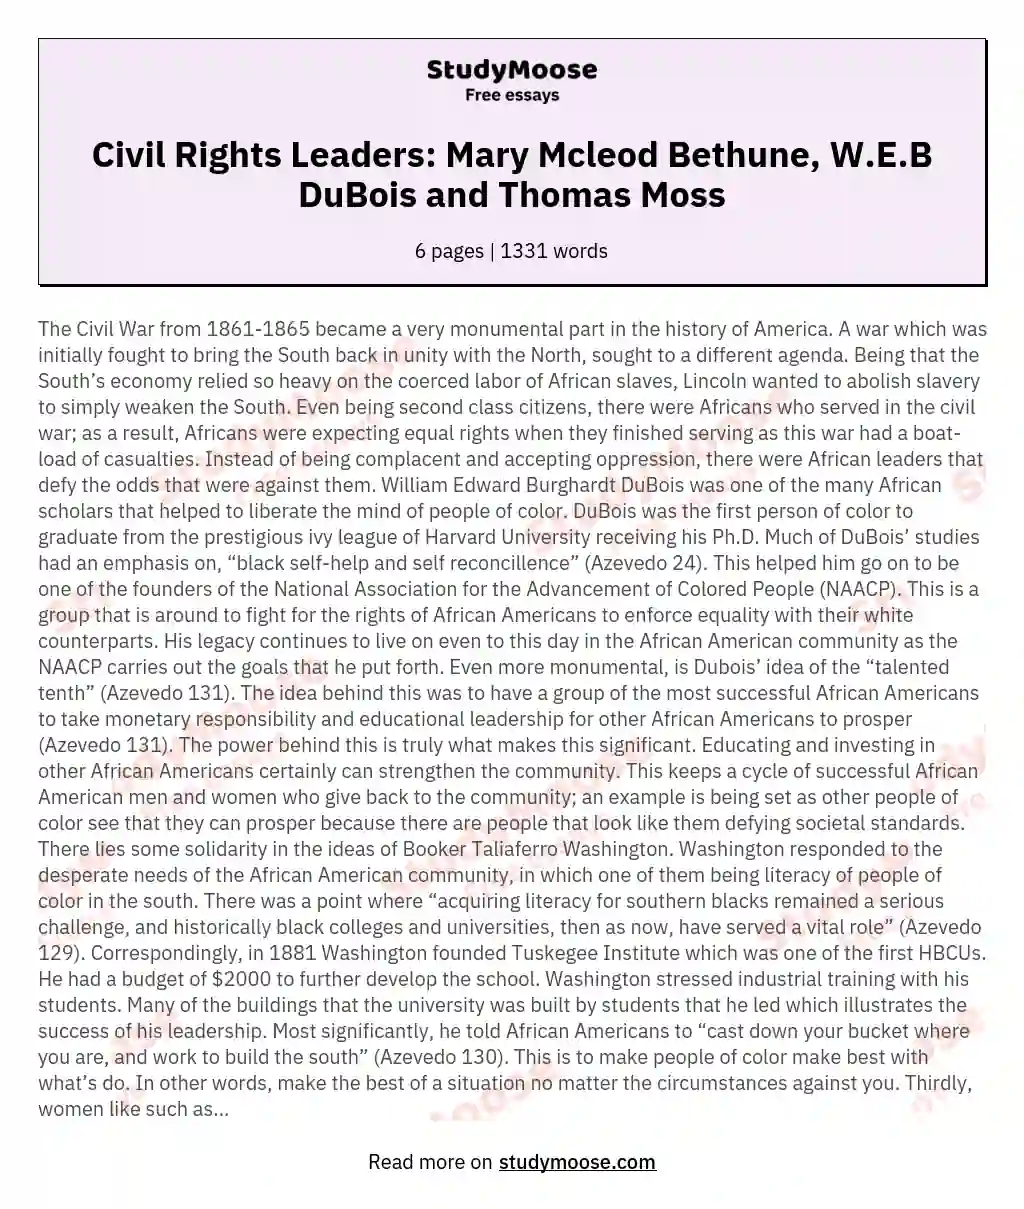 Civil Rights Leaders: Mary Mcleod Bethune, W.E.B DuBois and Thomas Moss essay